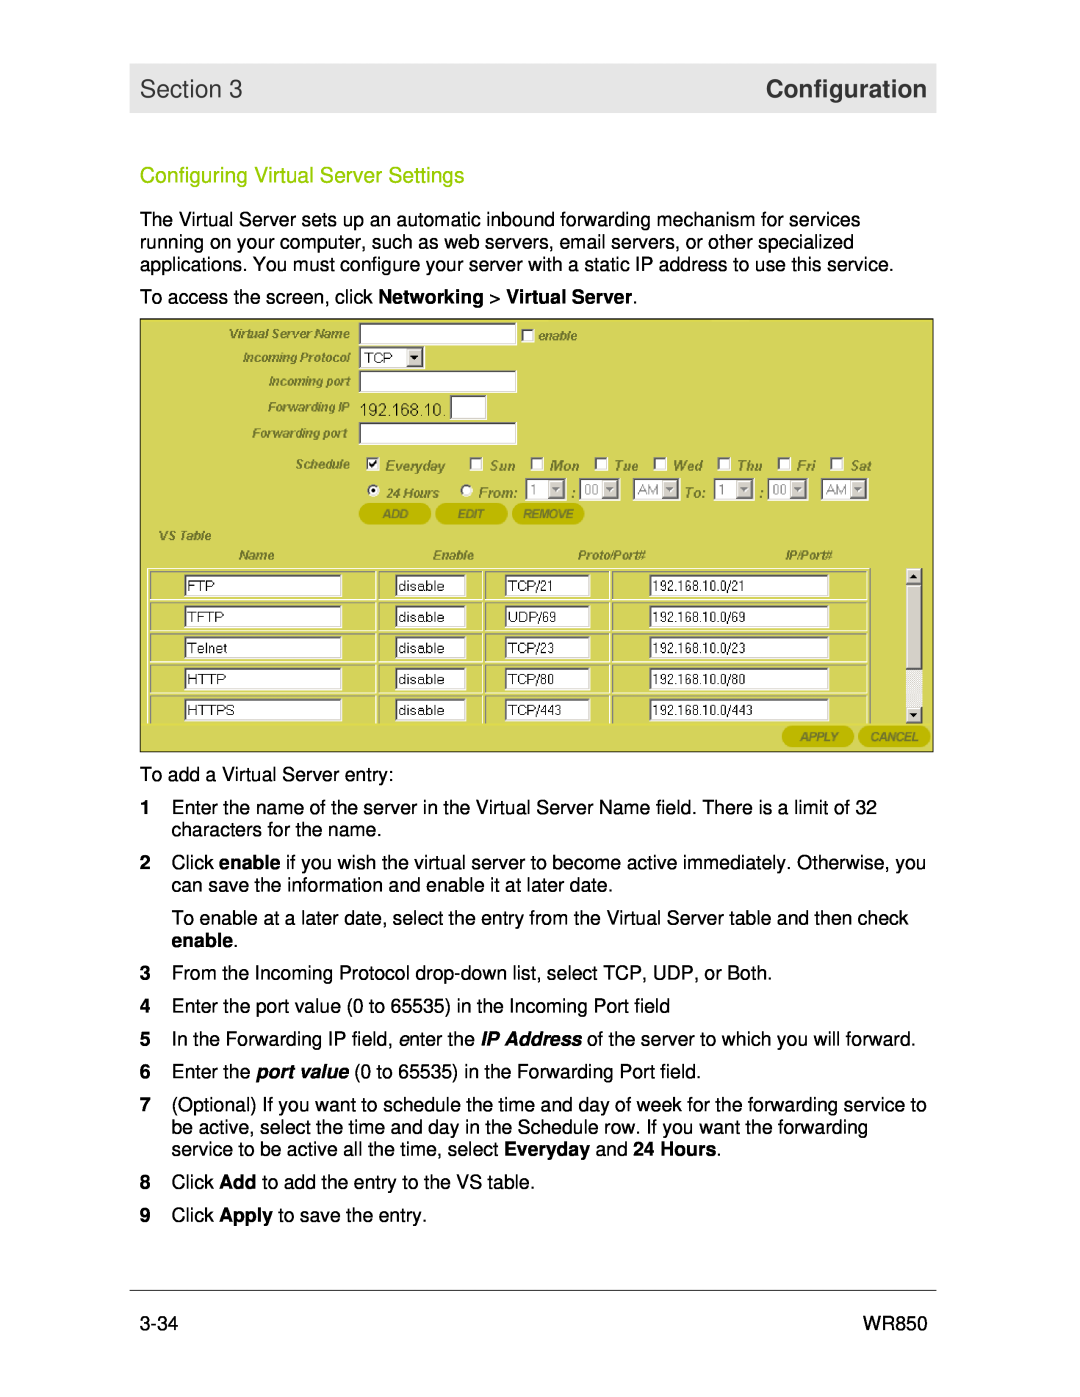 Motorola WR850 manual Configuring Virtual Server Settings, Section, Configuration 